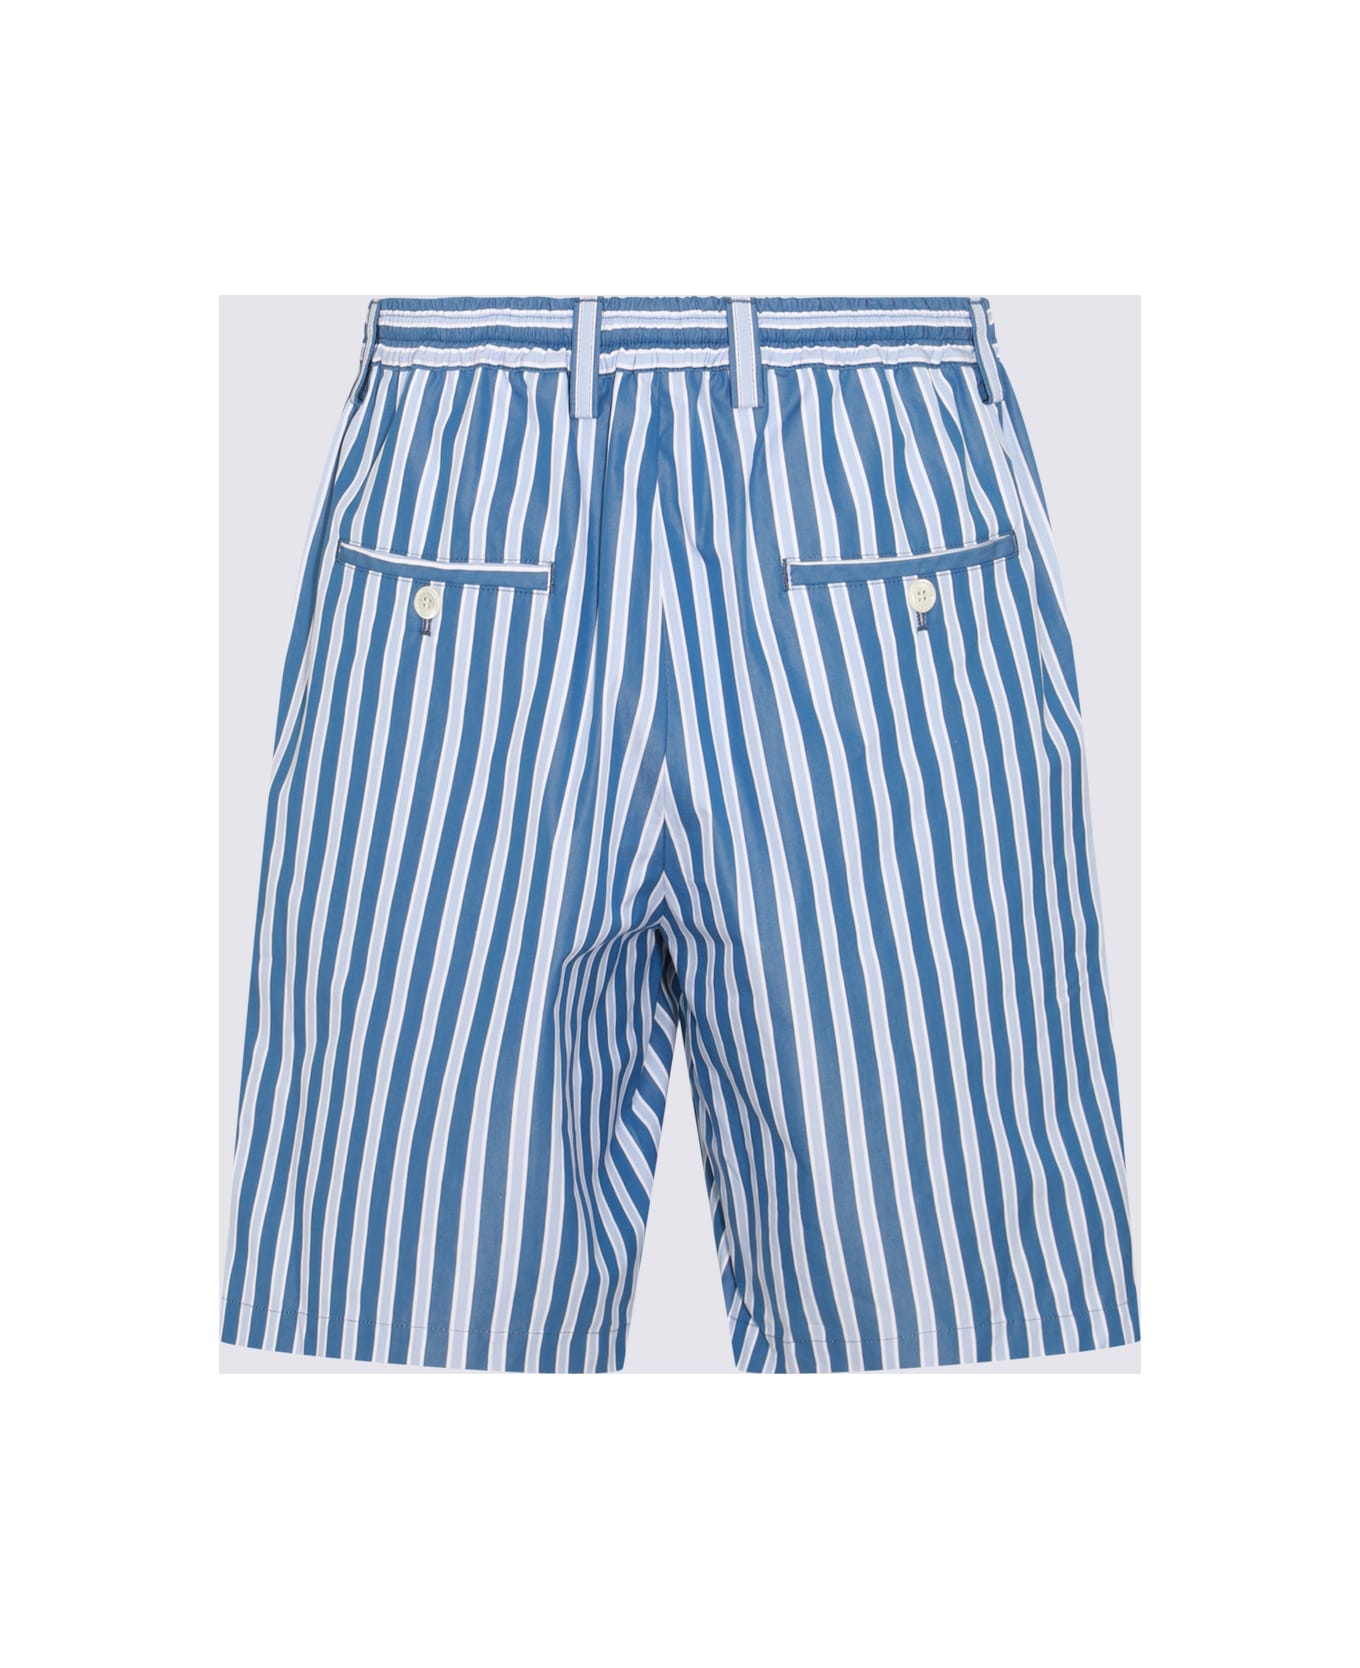 Marni White And Light Blue Cotton Shorts - OPAL ショートパンツ